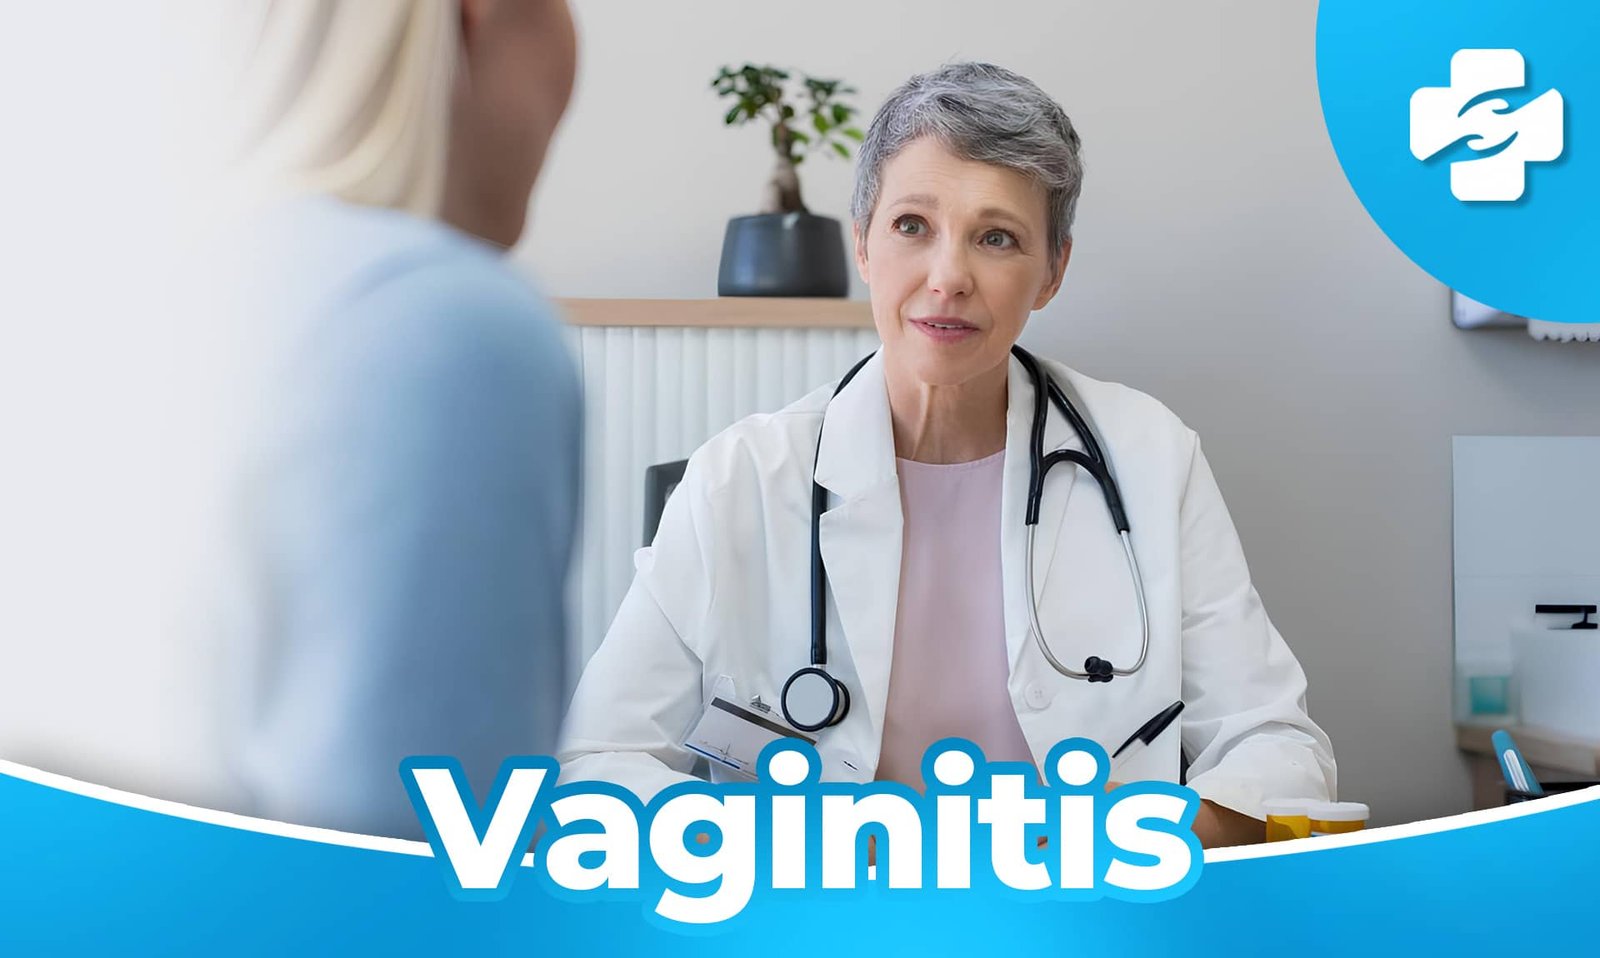 Pengobatan Vaginitis - Klinik Utama Sentosa